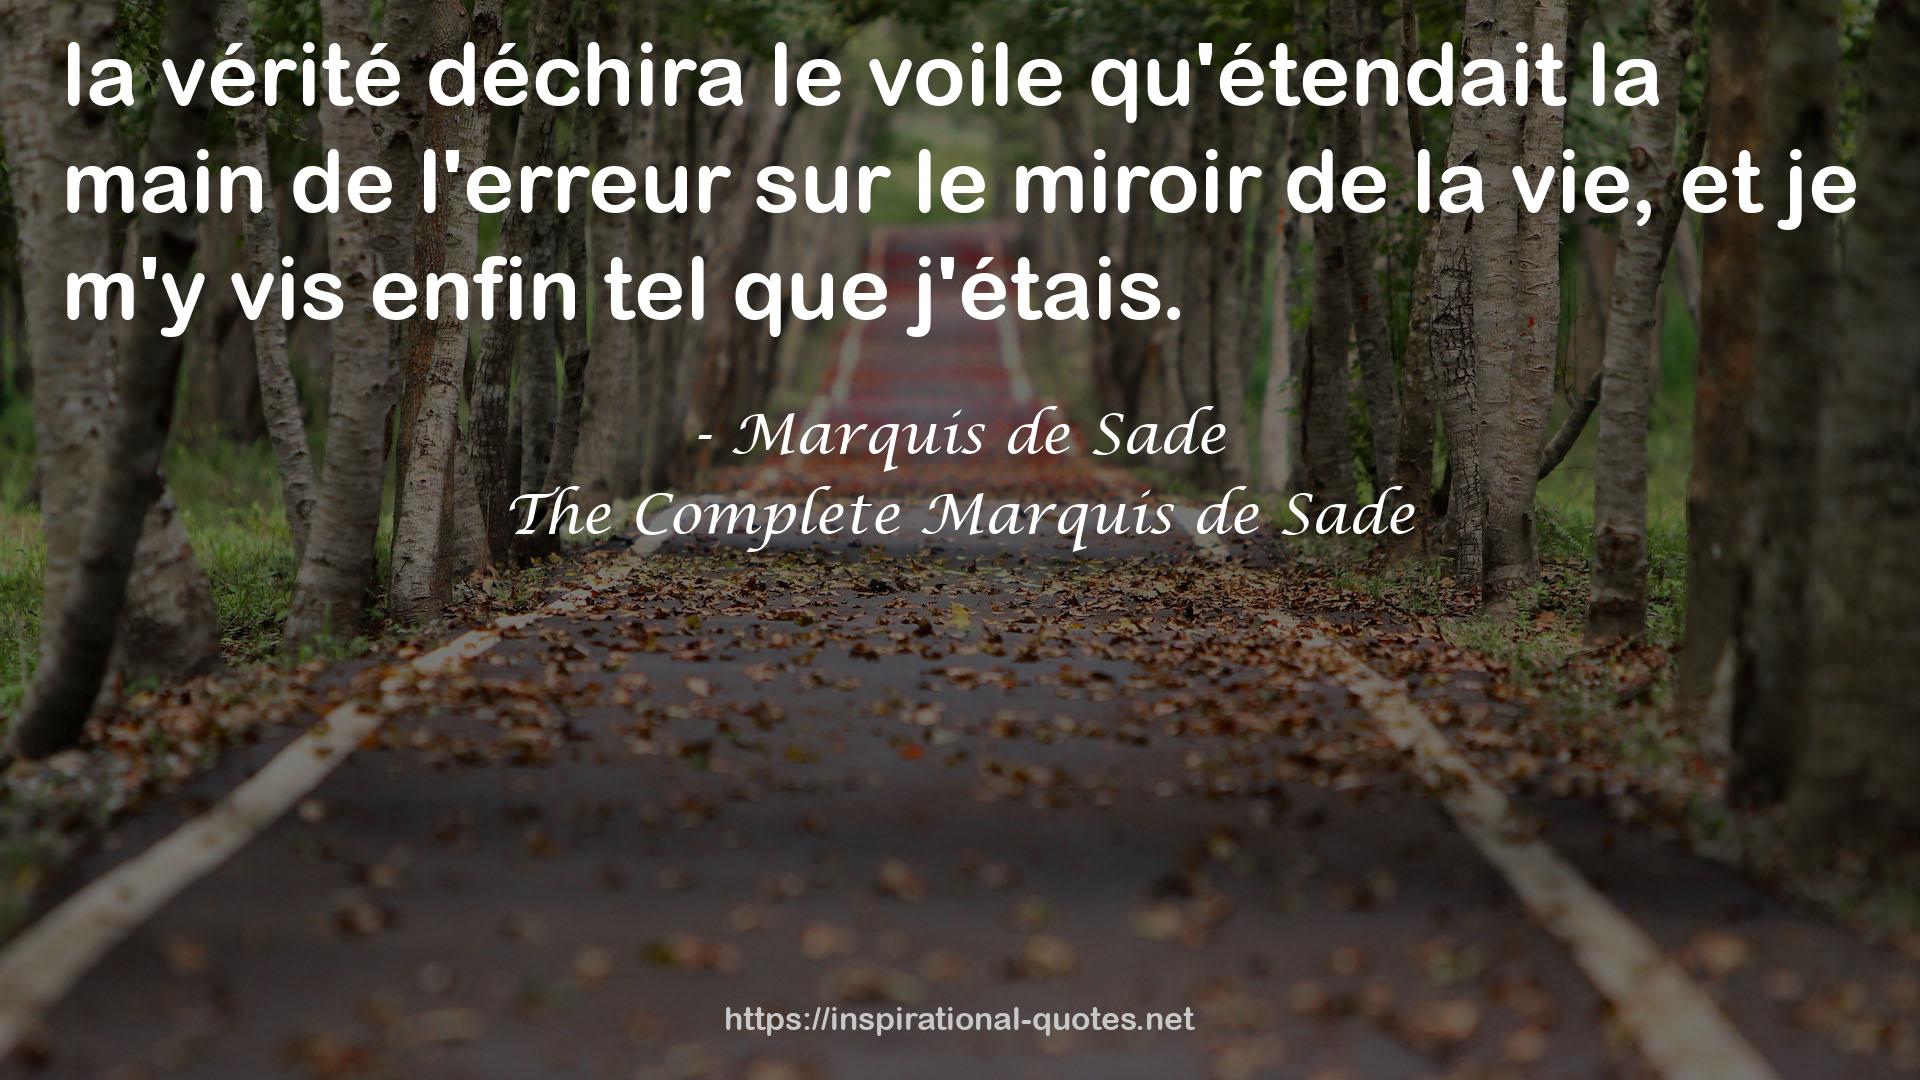 The Complete Marquis de Sade QUOTES